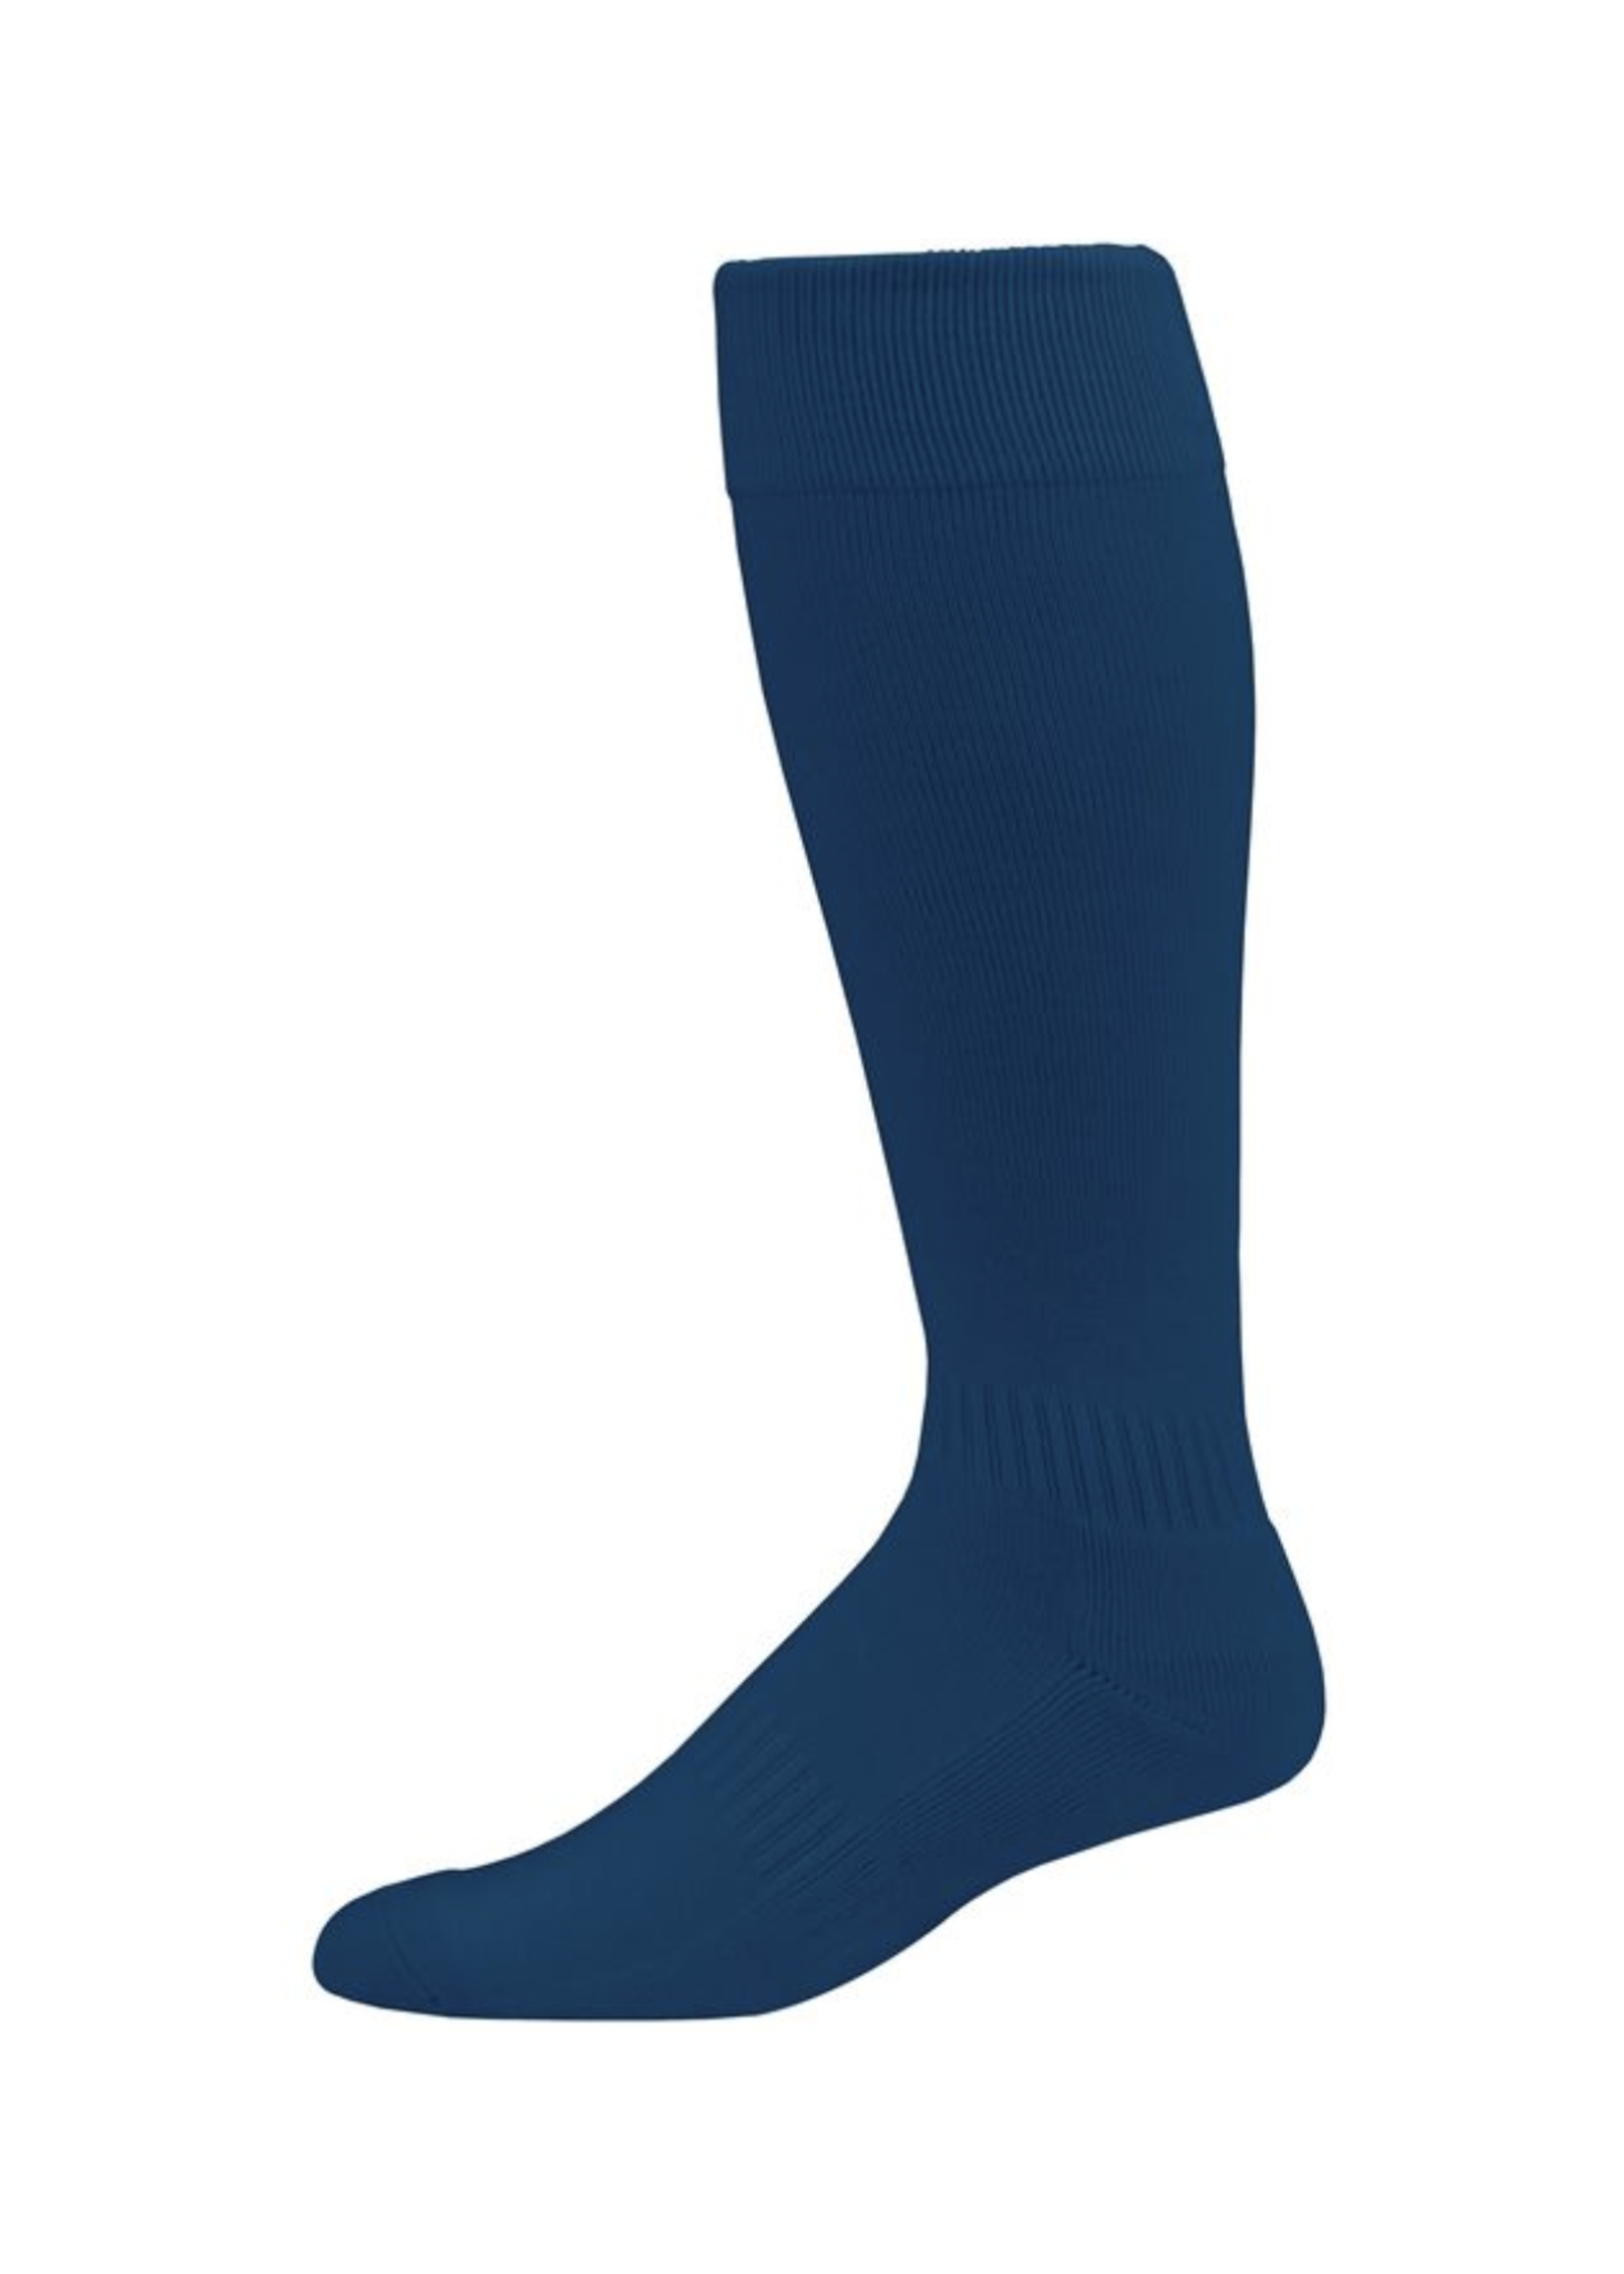 NON-UNIFORM Sock - Multi-Sport Sock